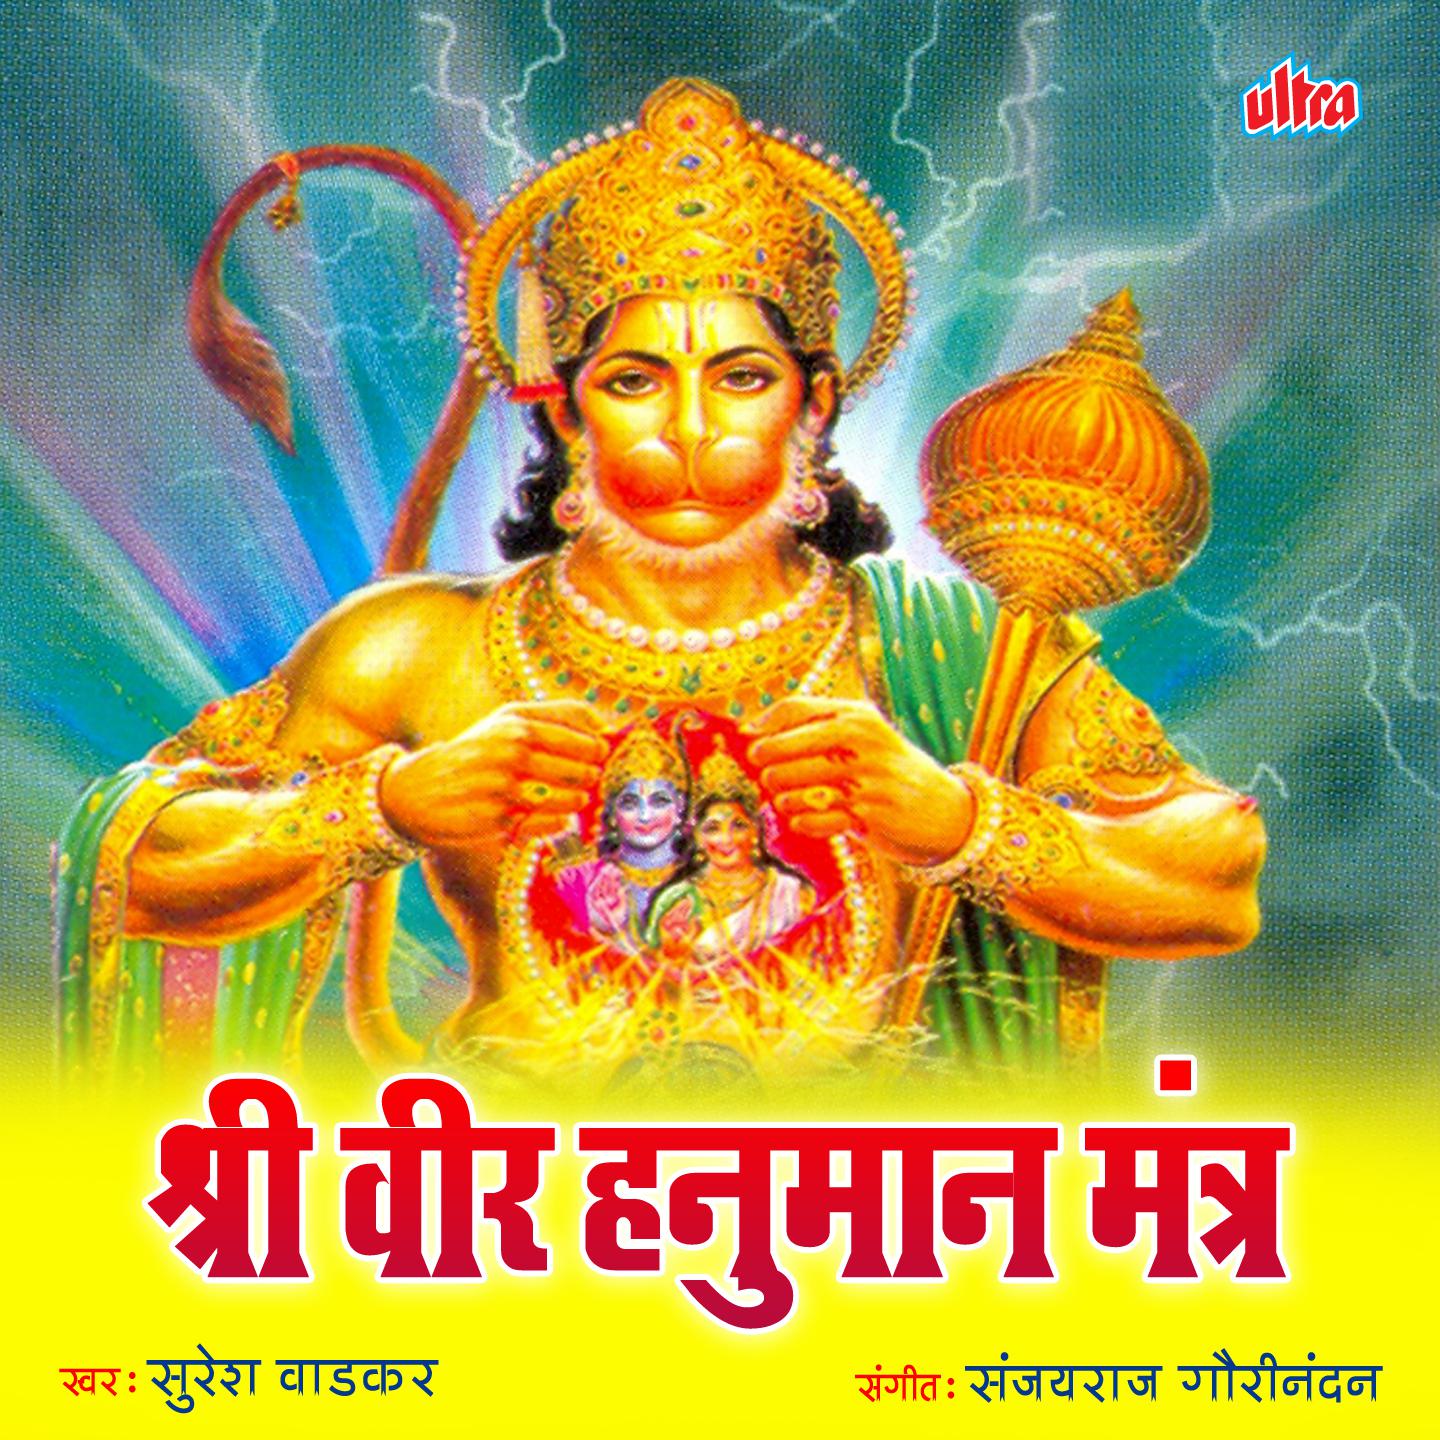 Shri Veer Hanuman Mantra